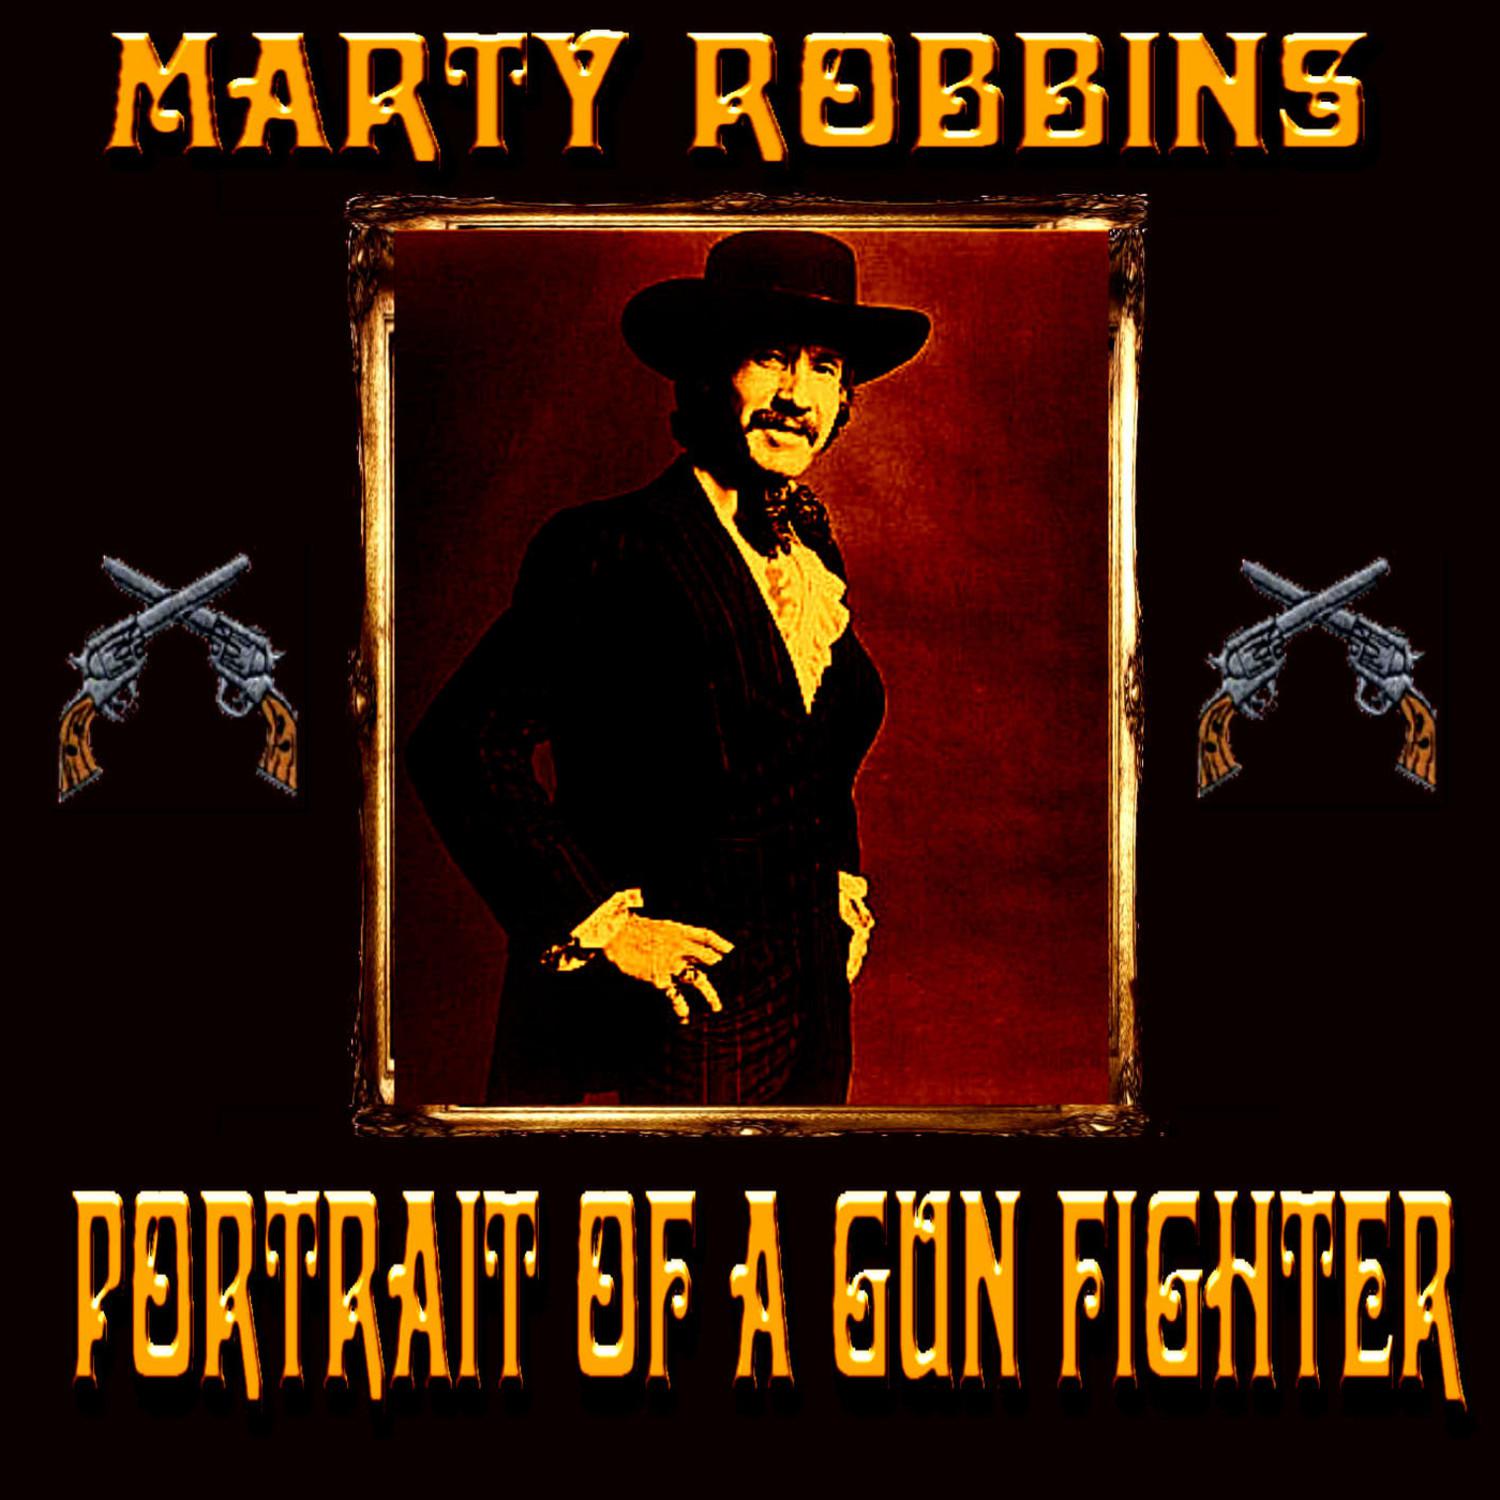 Portrait of a Gun Fighter